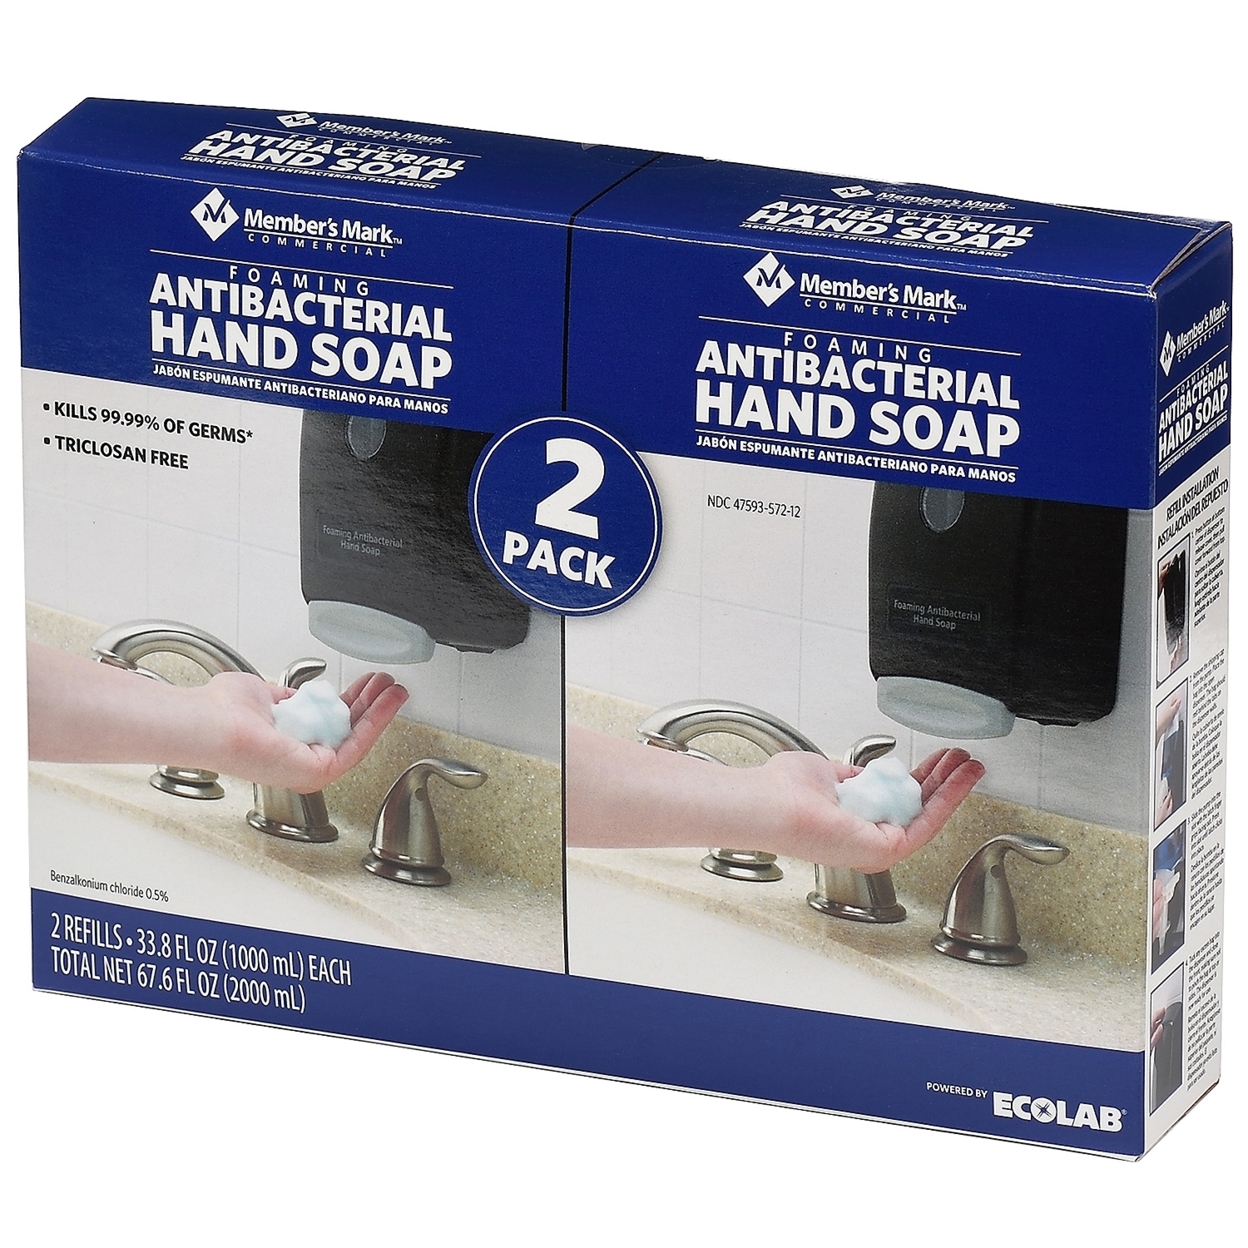 Member's Mark Commercial Foaming Antibacterial Hand Soap (2 Pack)